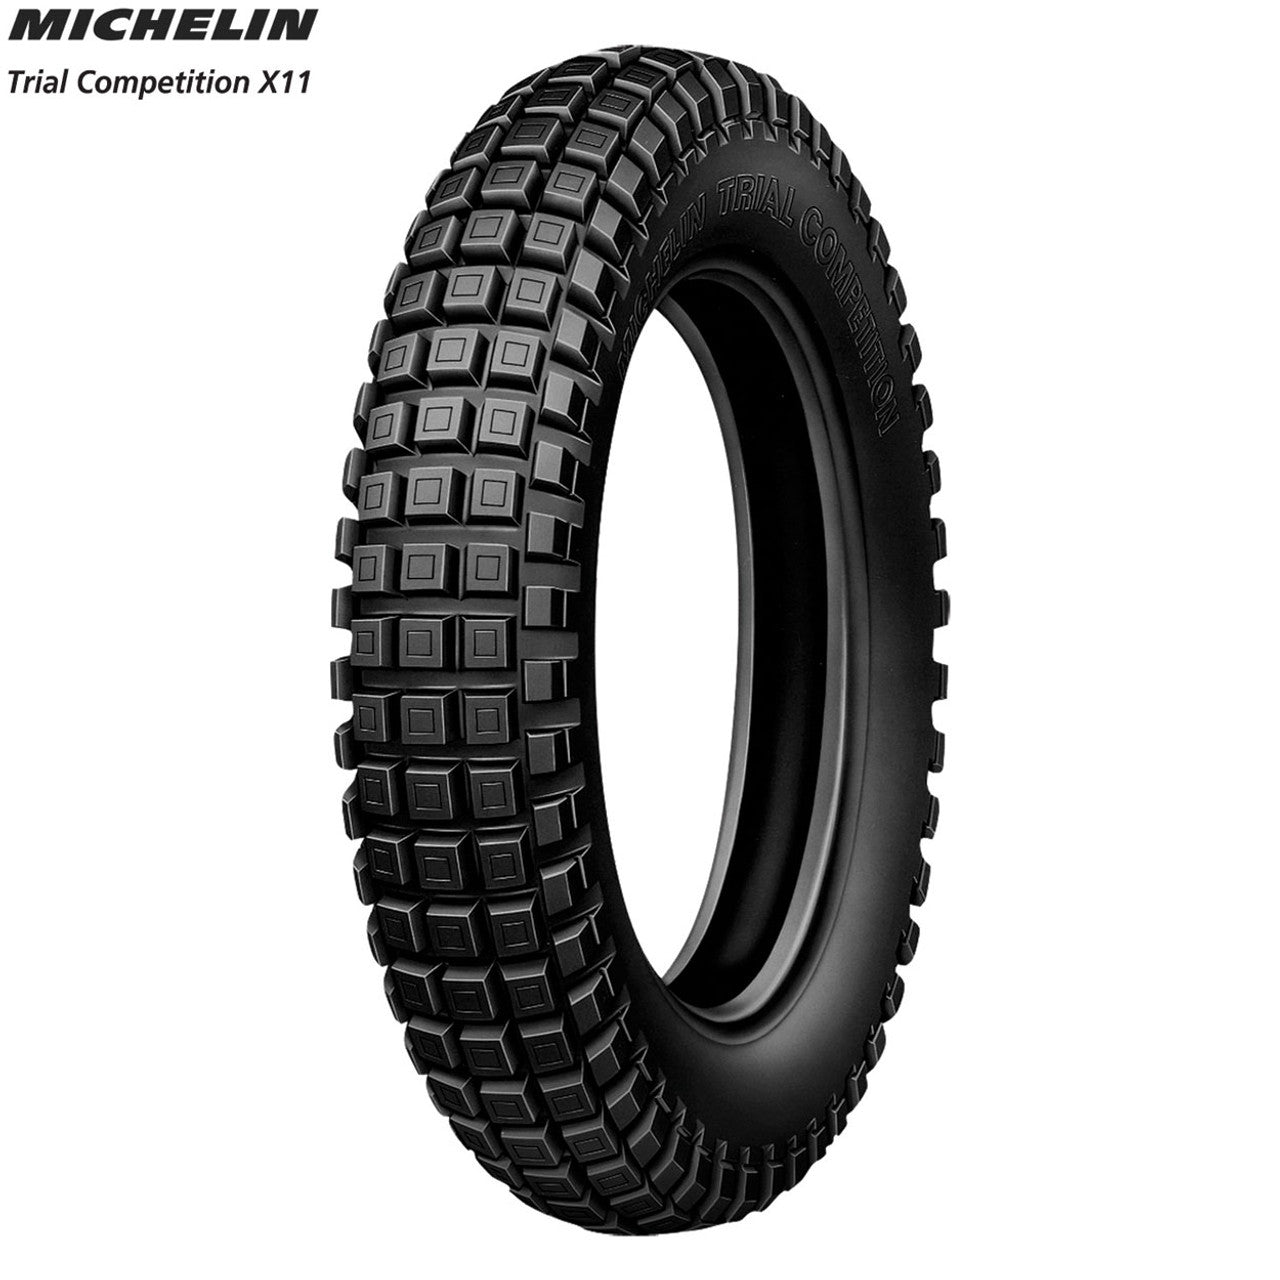 Michelin X11 Tubeless Trials Tyre Rear 4.0x18